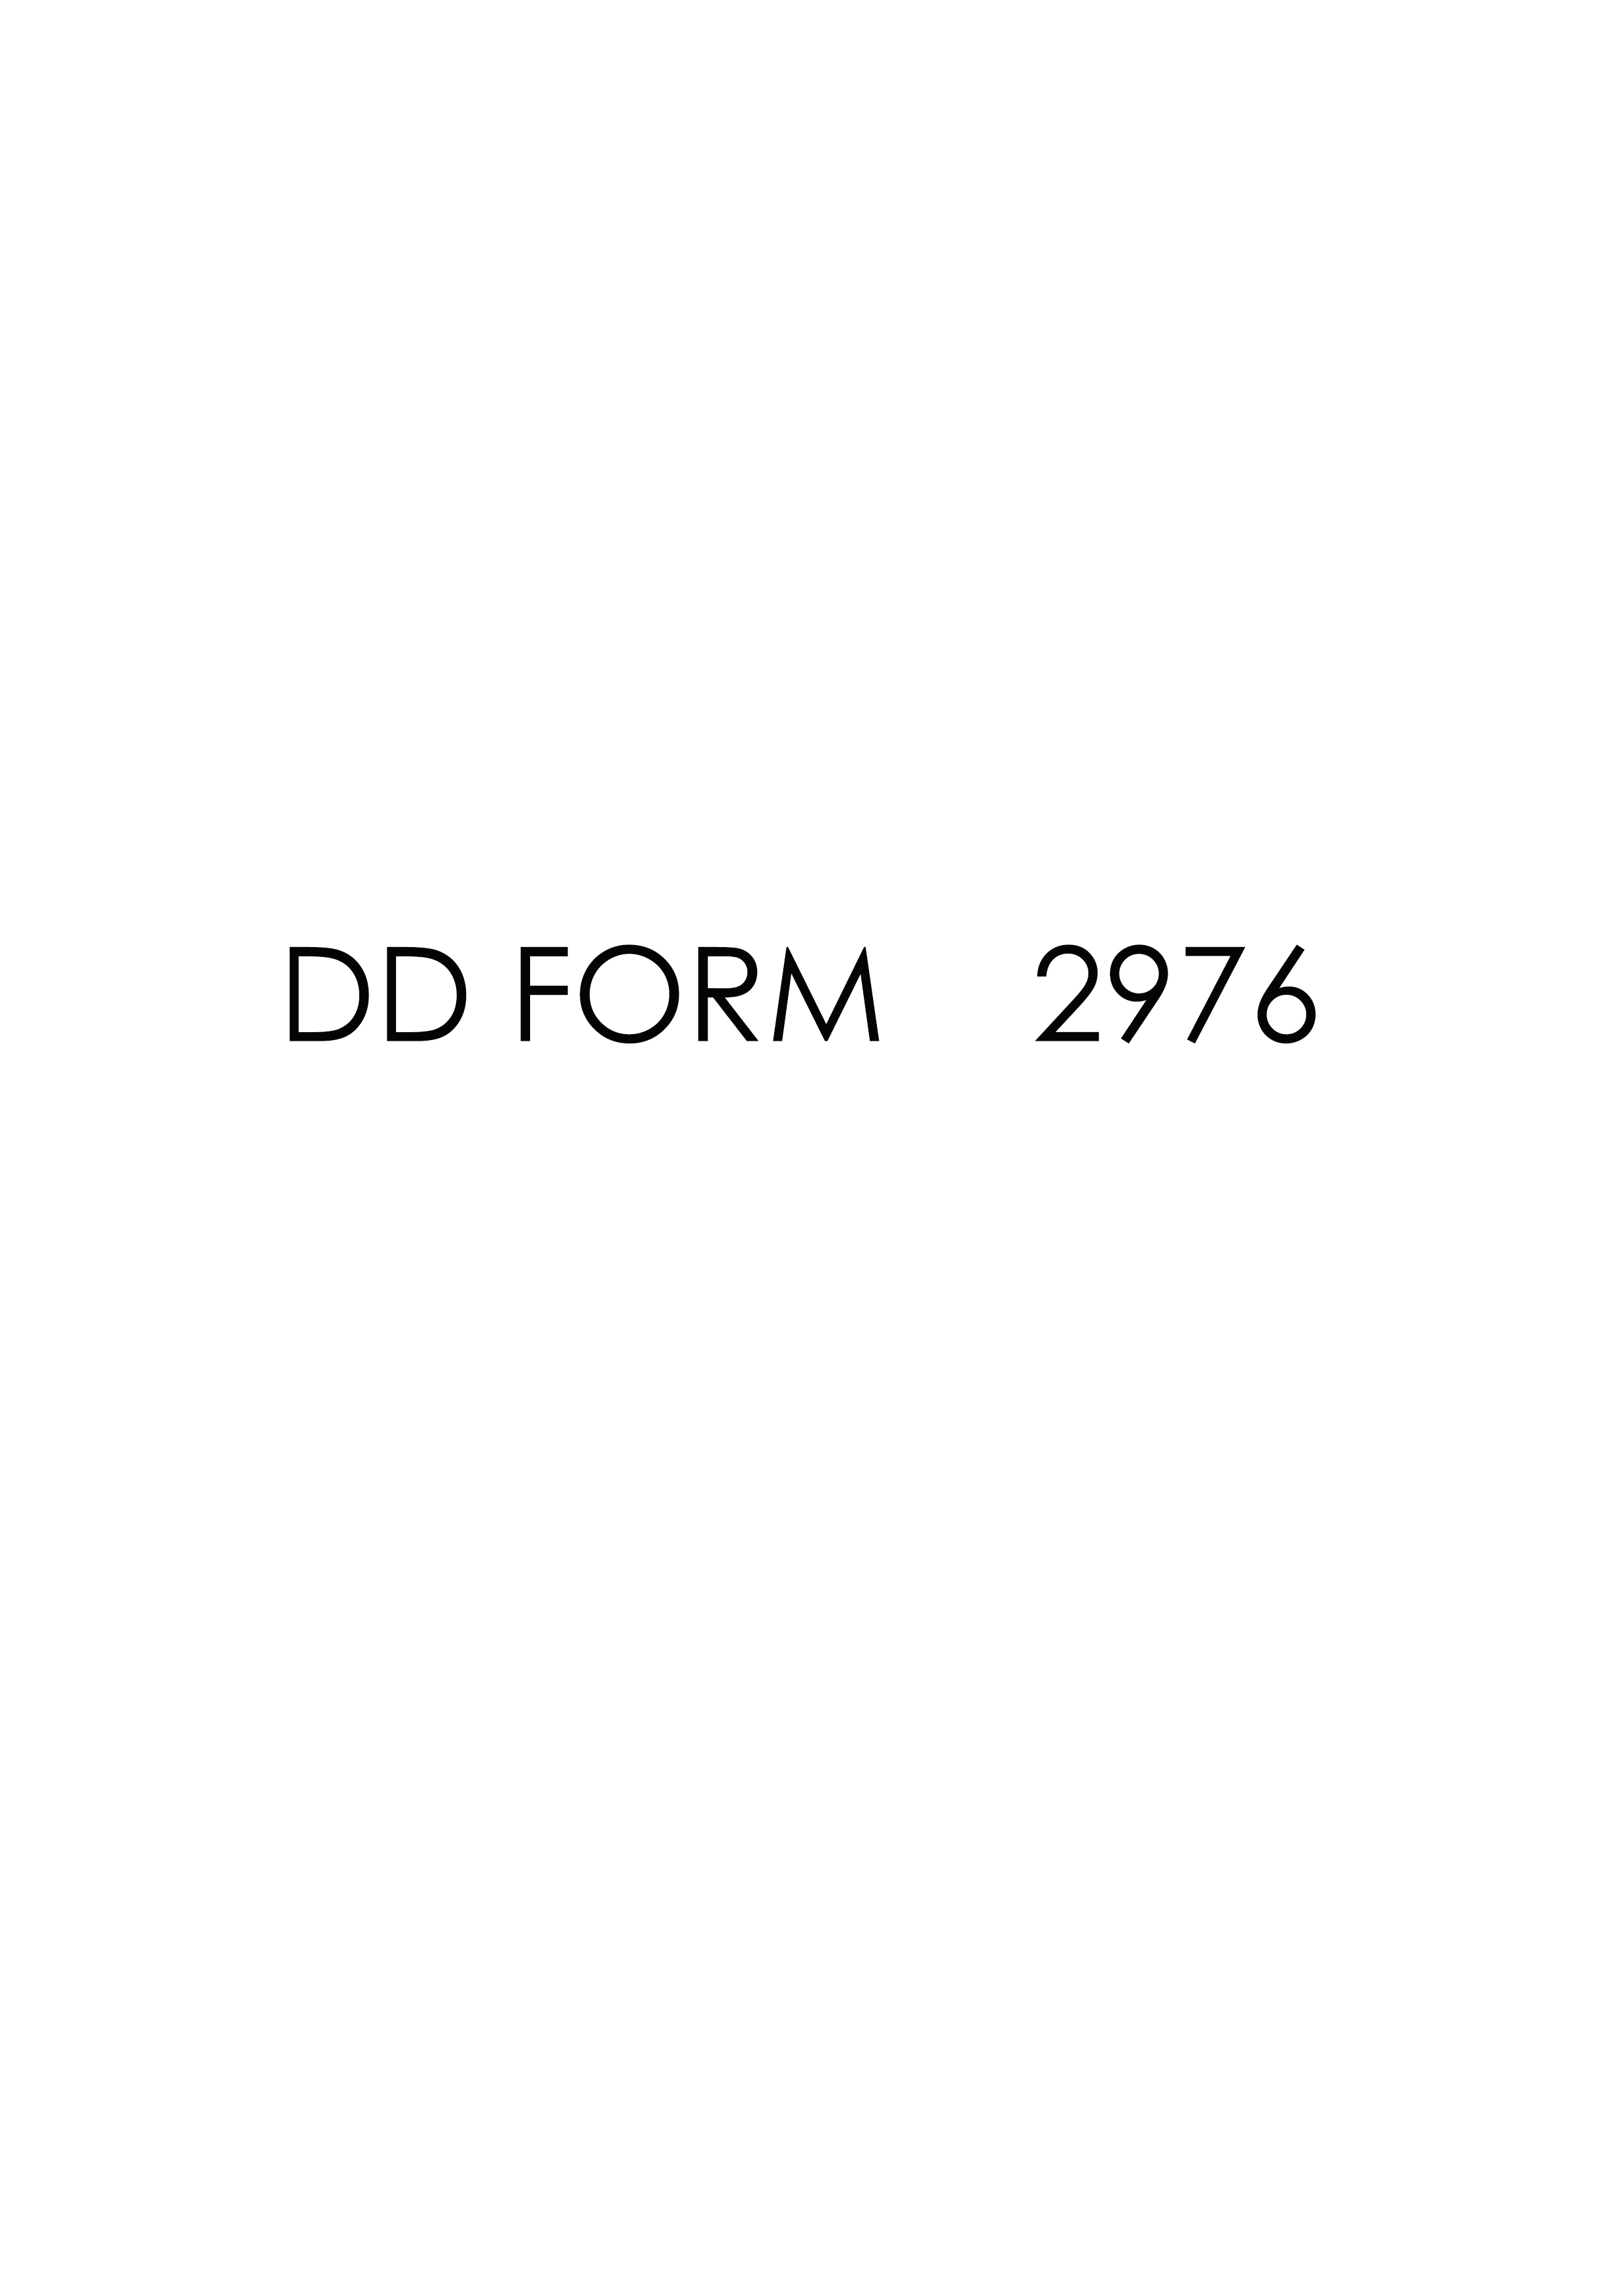 download-dd-2976-fillable-form-suttleandking